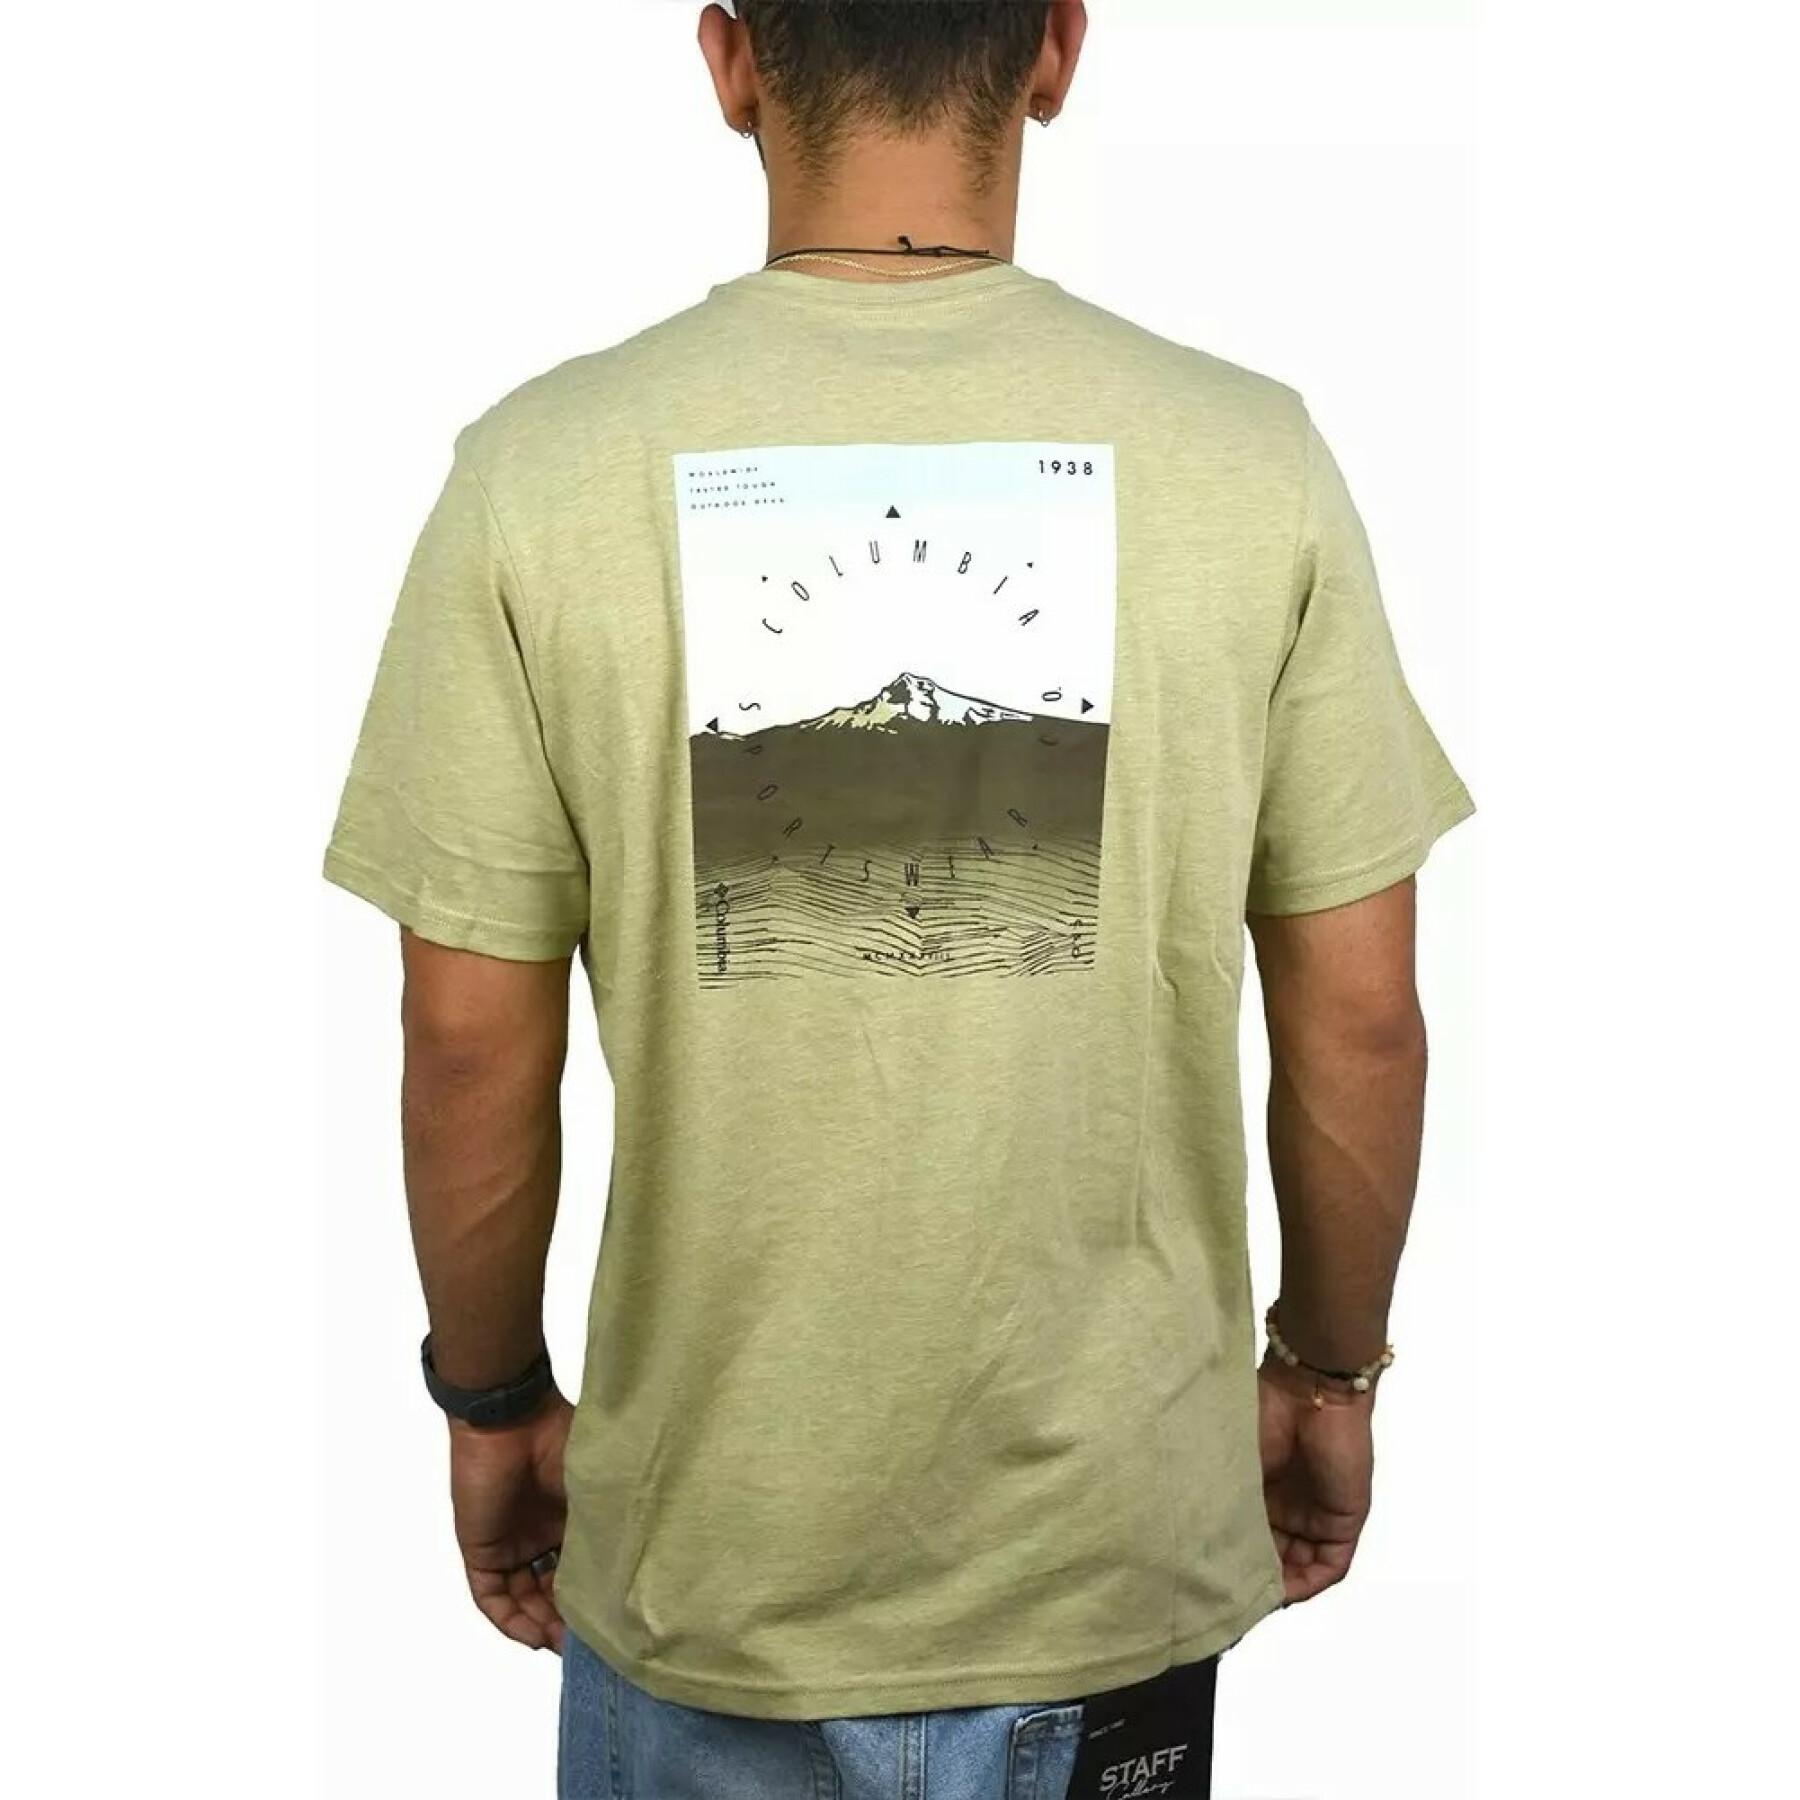 Camiseta Columbia High Dune Graphic Ii